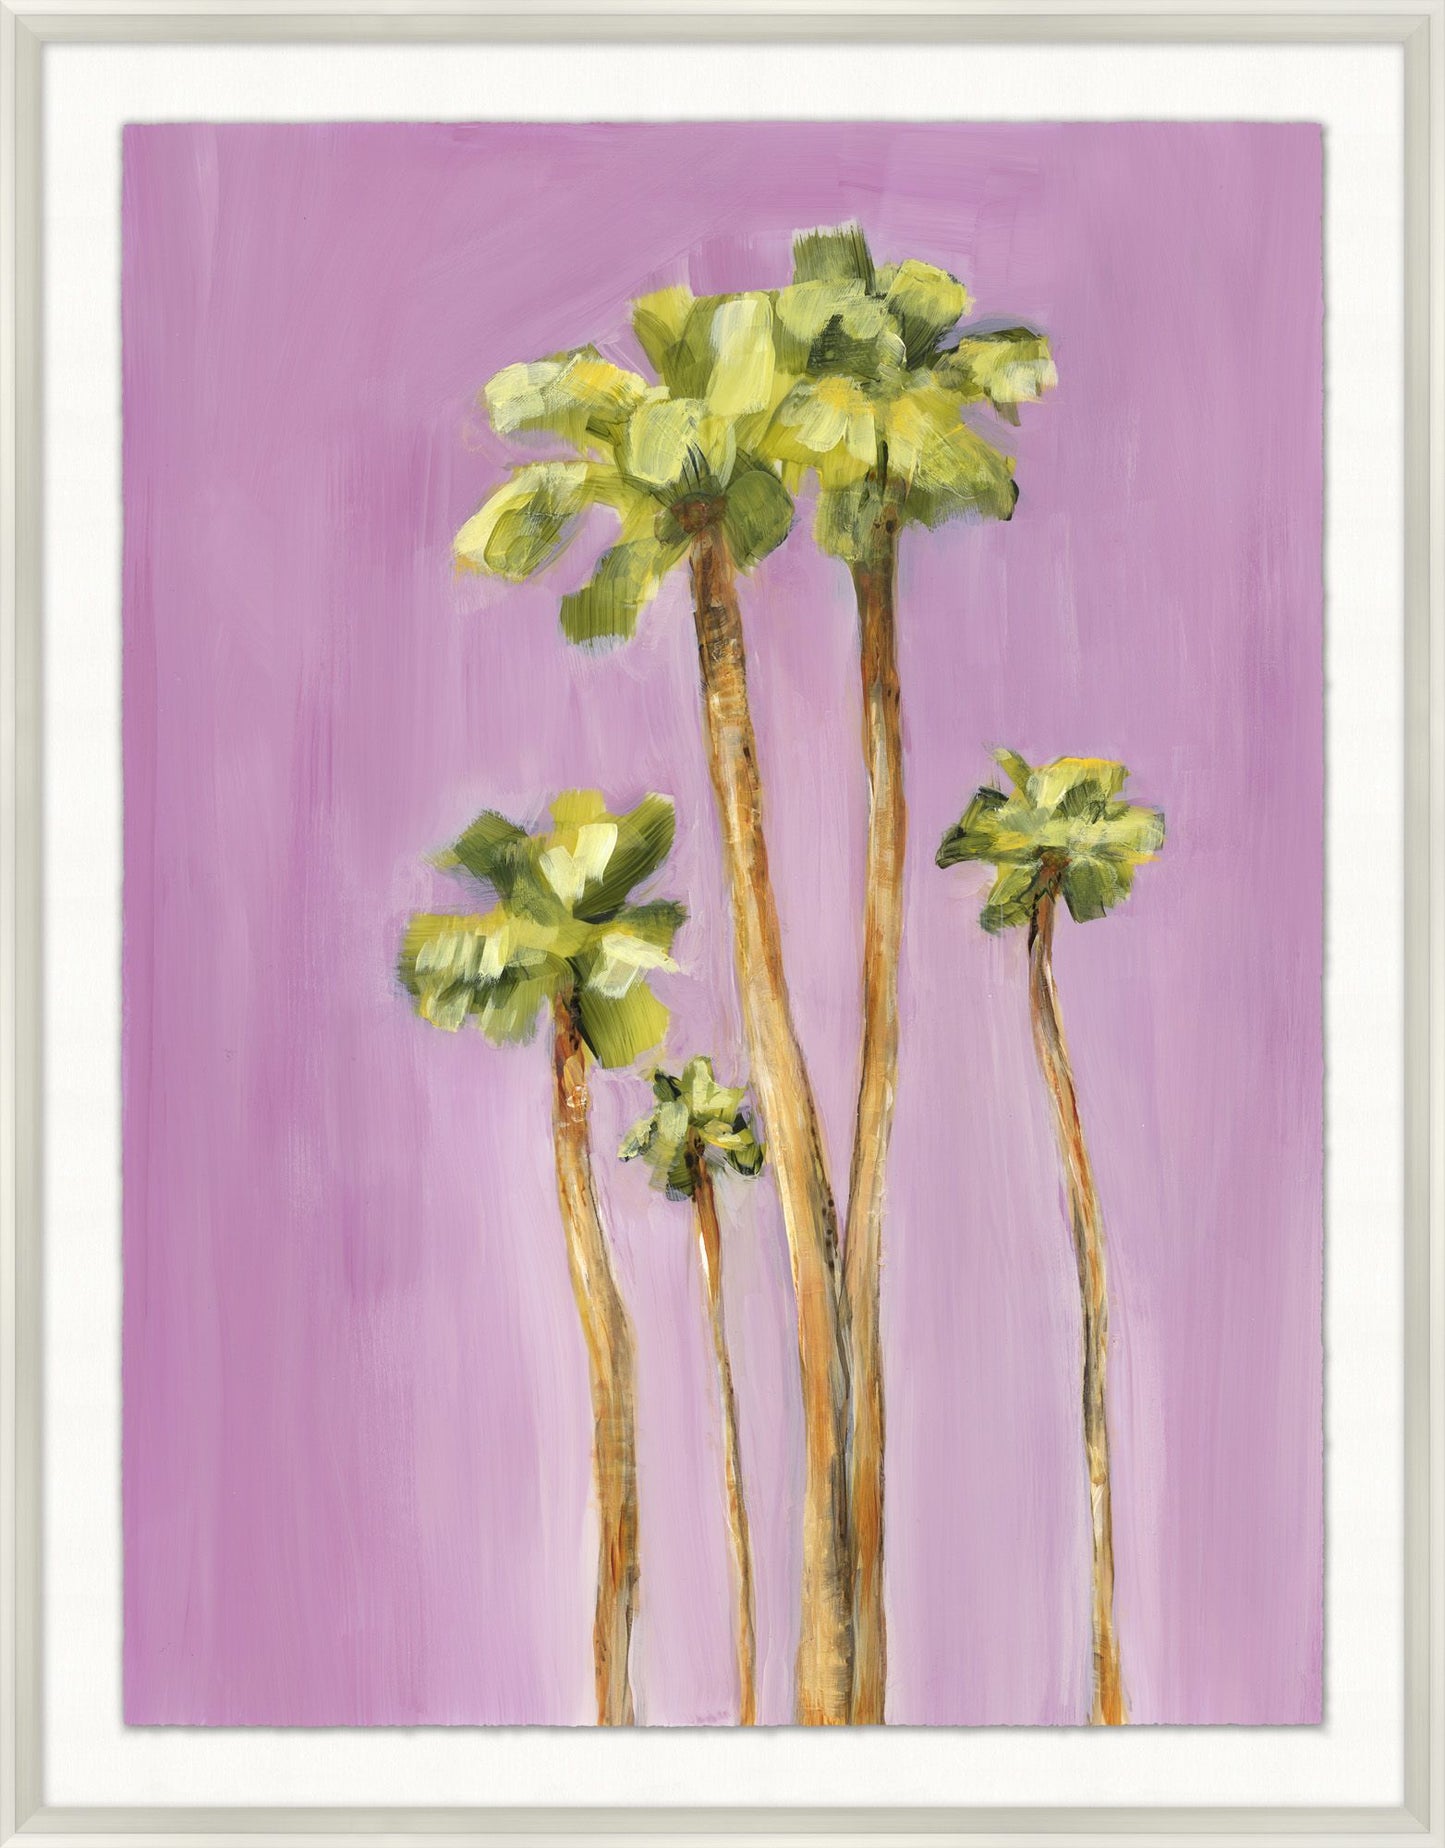 Dancing palm trees